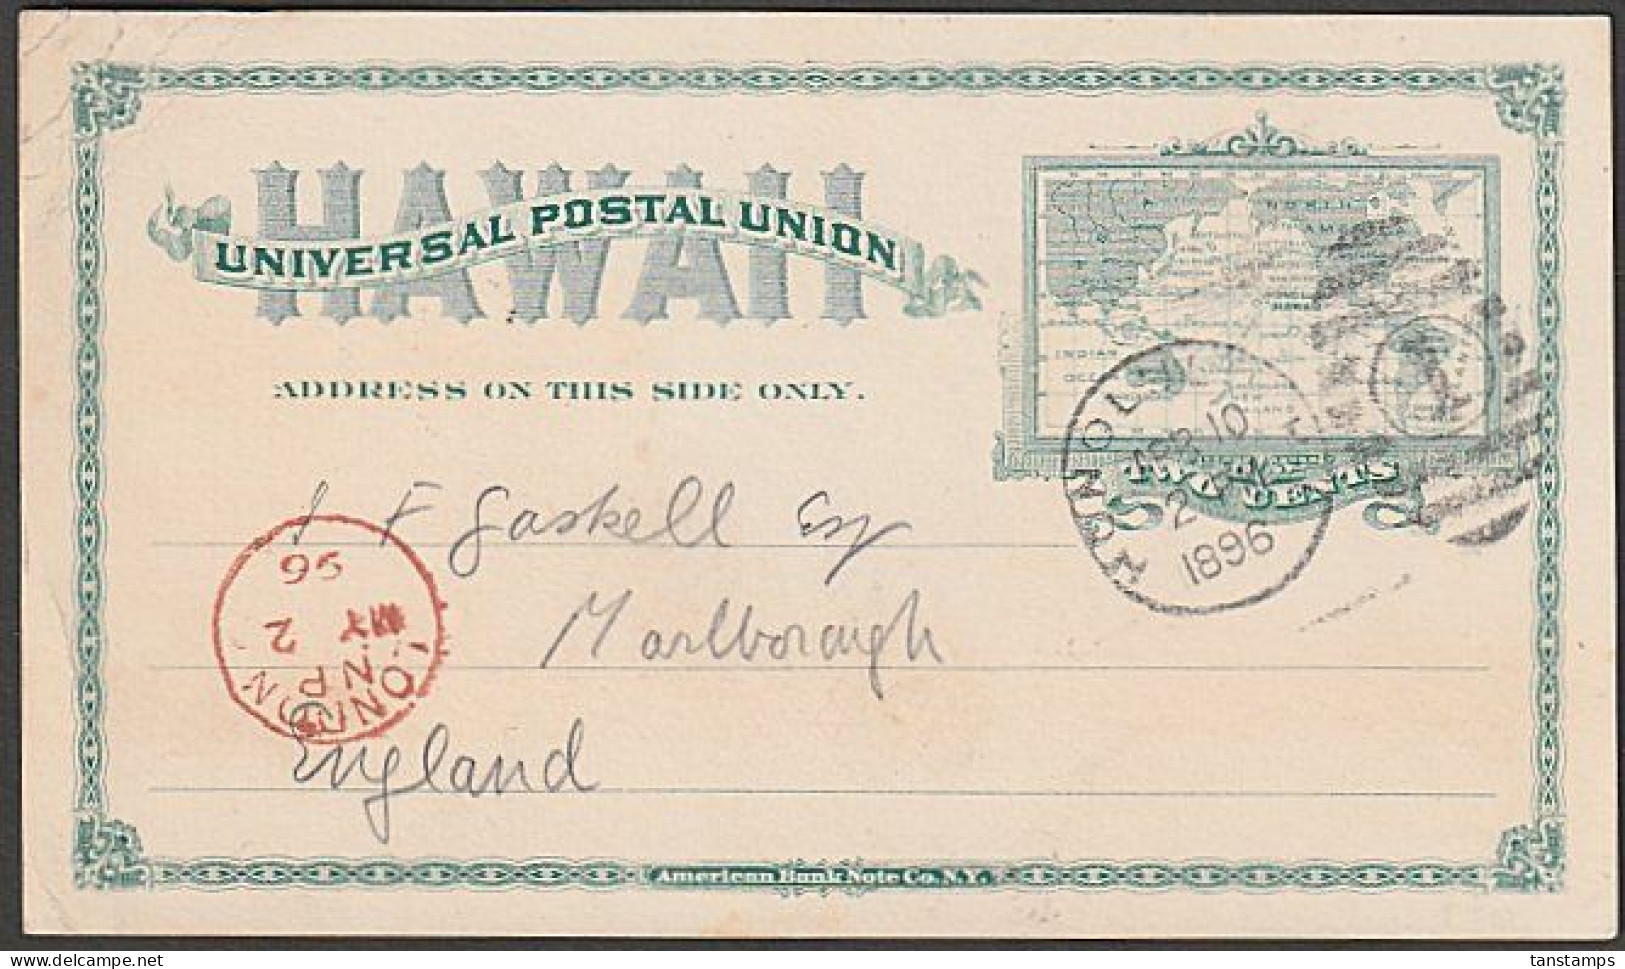 HAWAII - ENGLAND 1896 UPU 2c POSTAL STATIONERY CARD - Hawaii